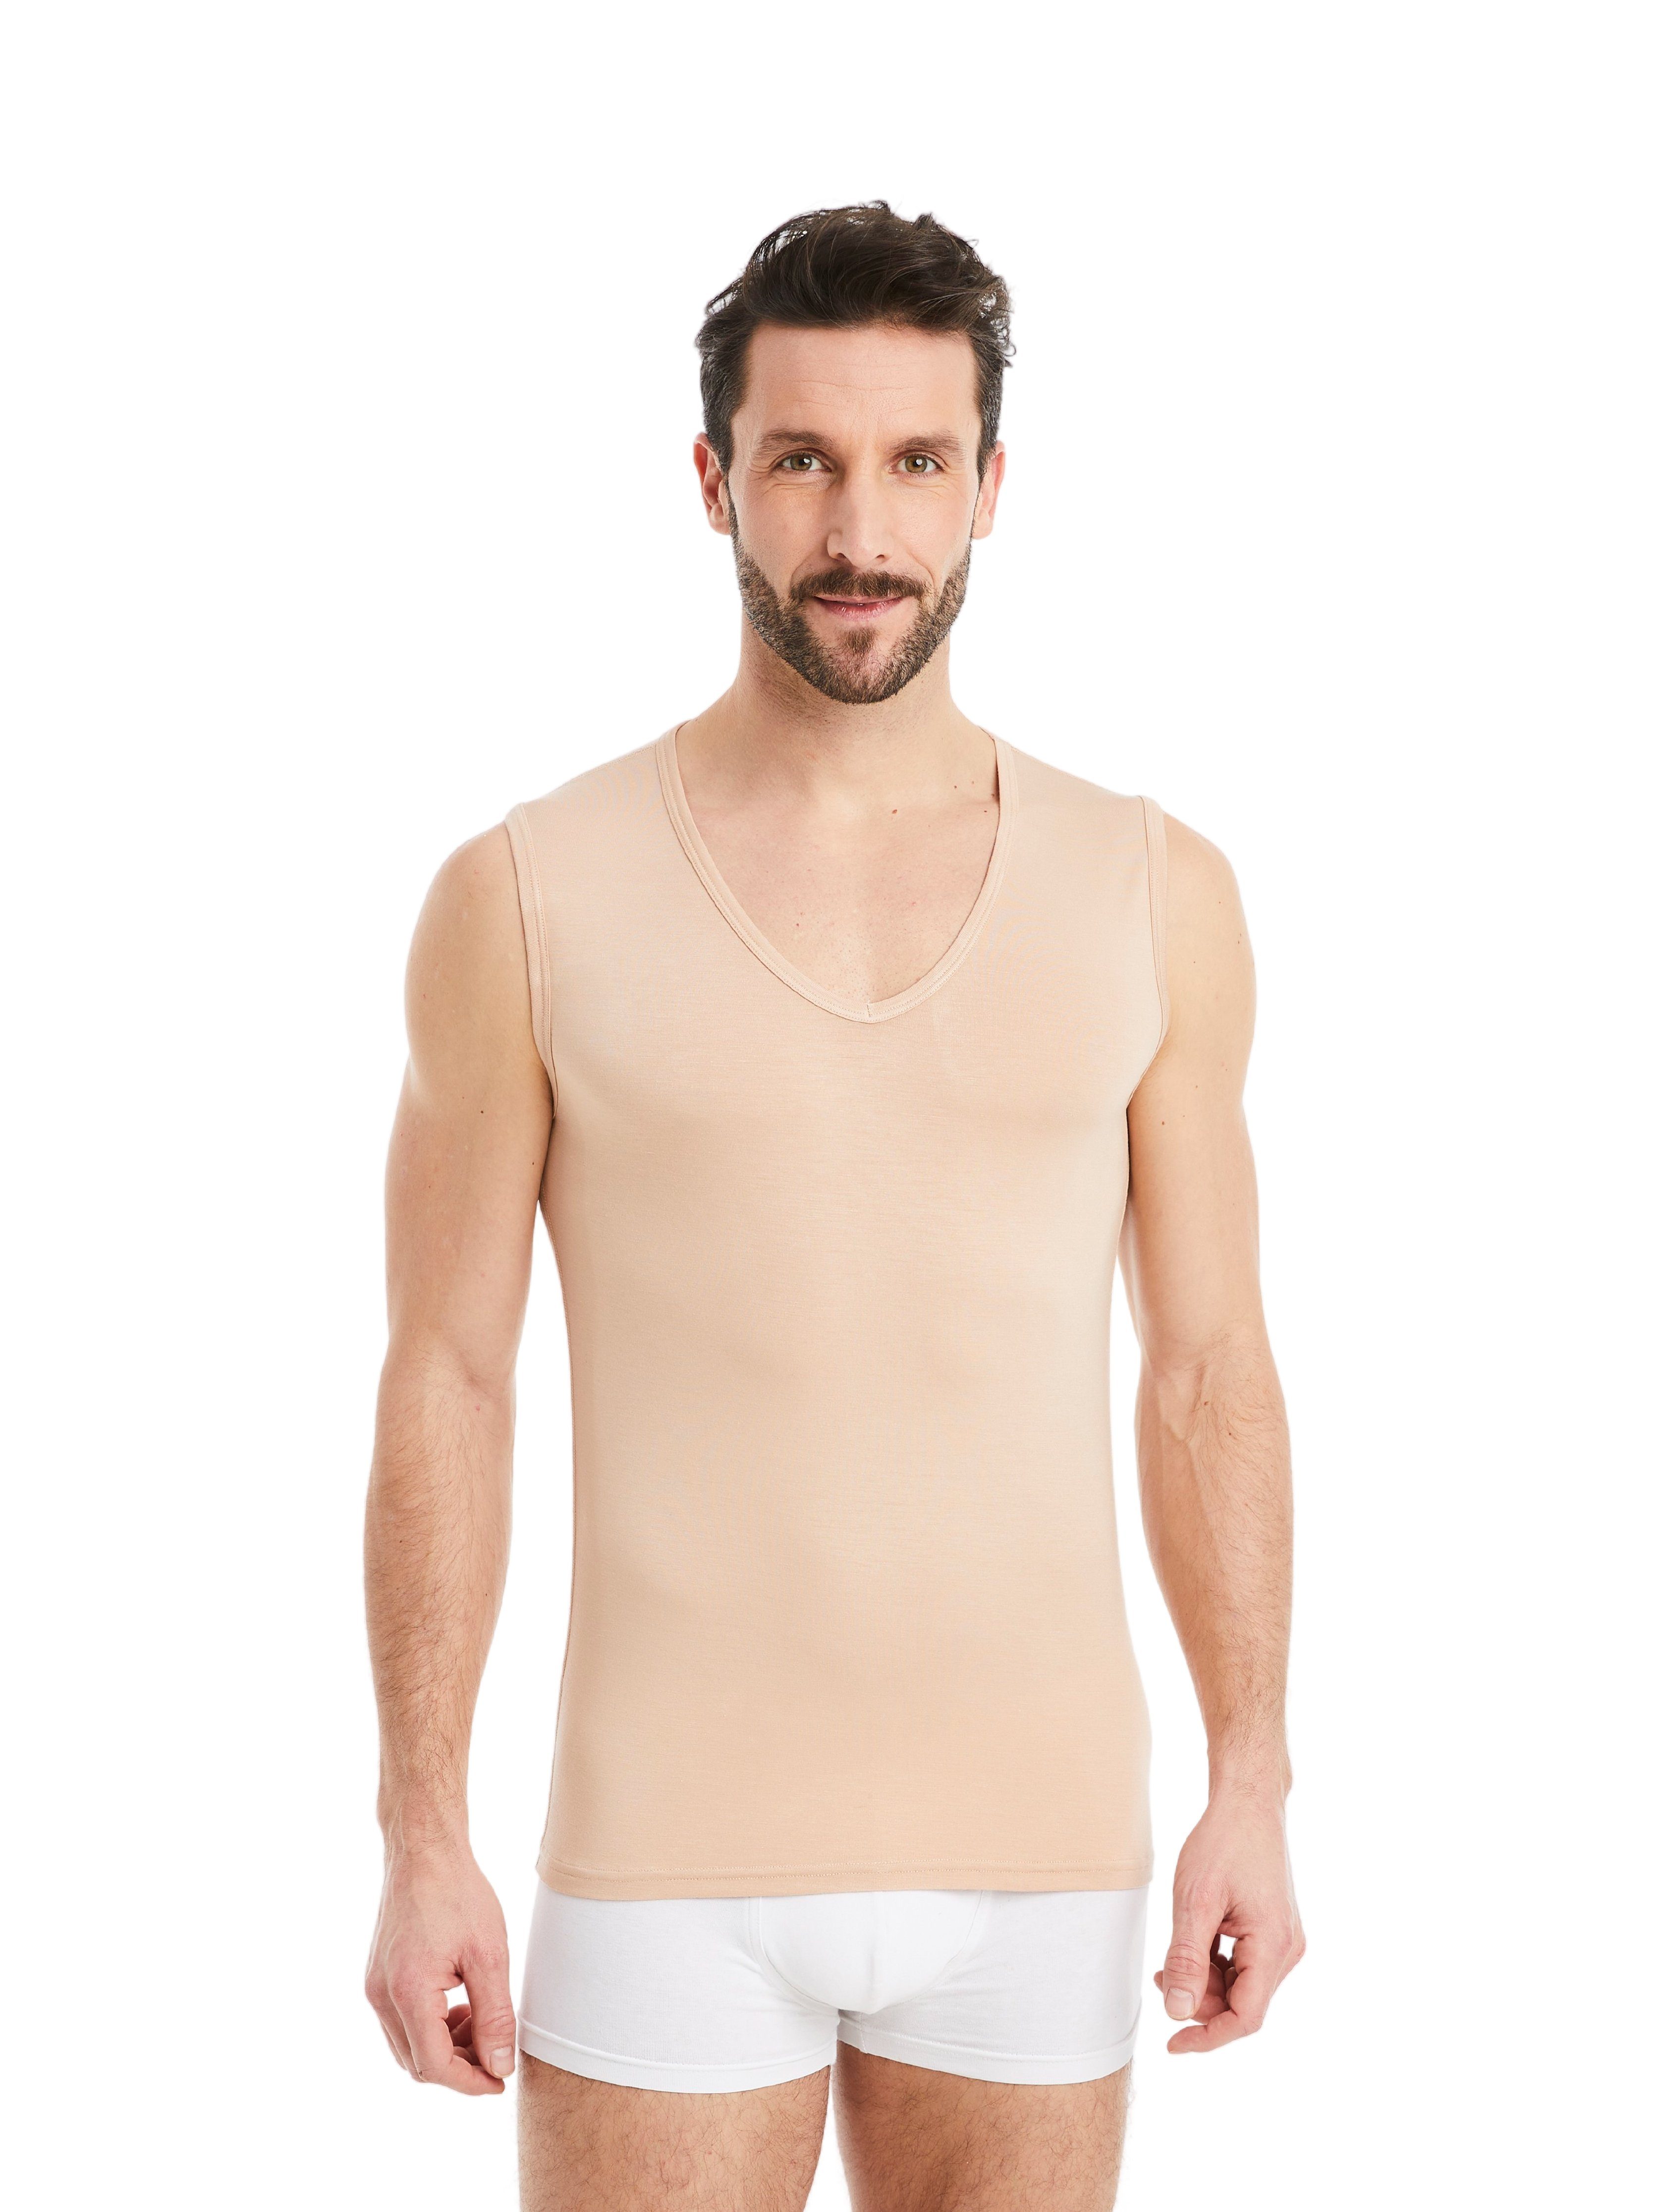 FINN Design Achselhemd Business Unterhemd Ärmellos mit V-Ausschnitt Herren feiner Micro-Modal Stoff, maximaler Tragekomfort Light-Beige | Unterhemden